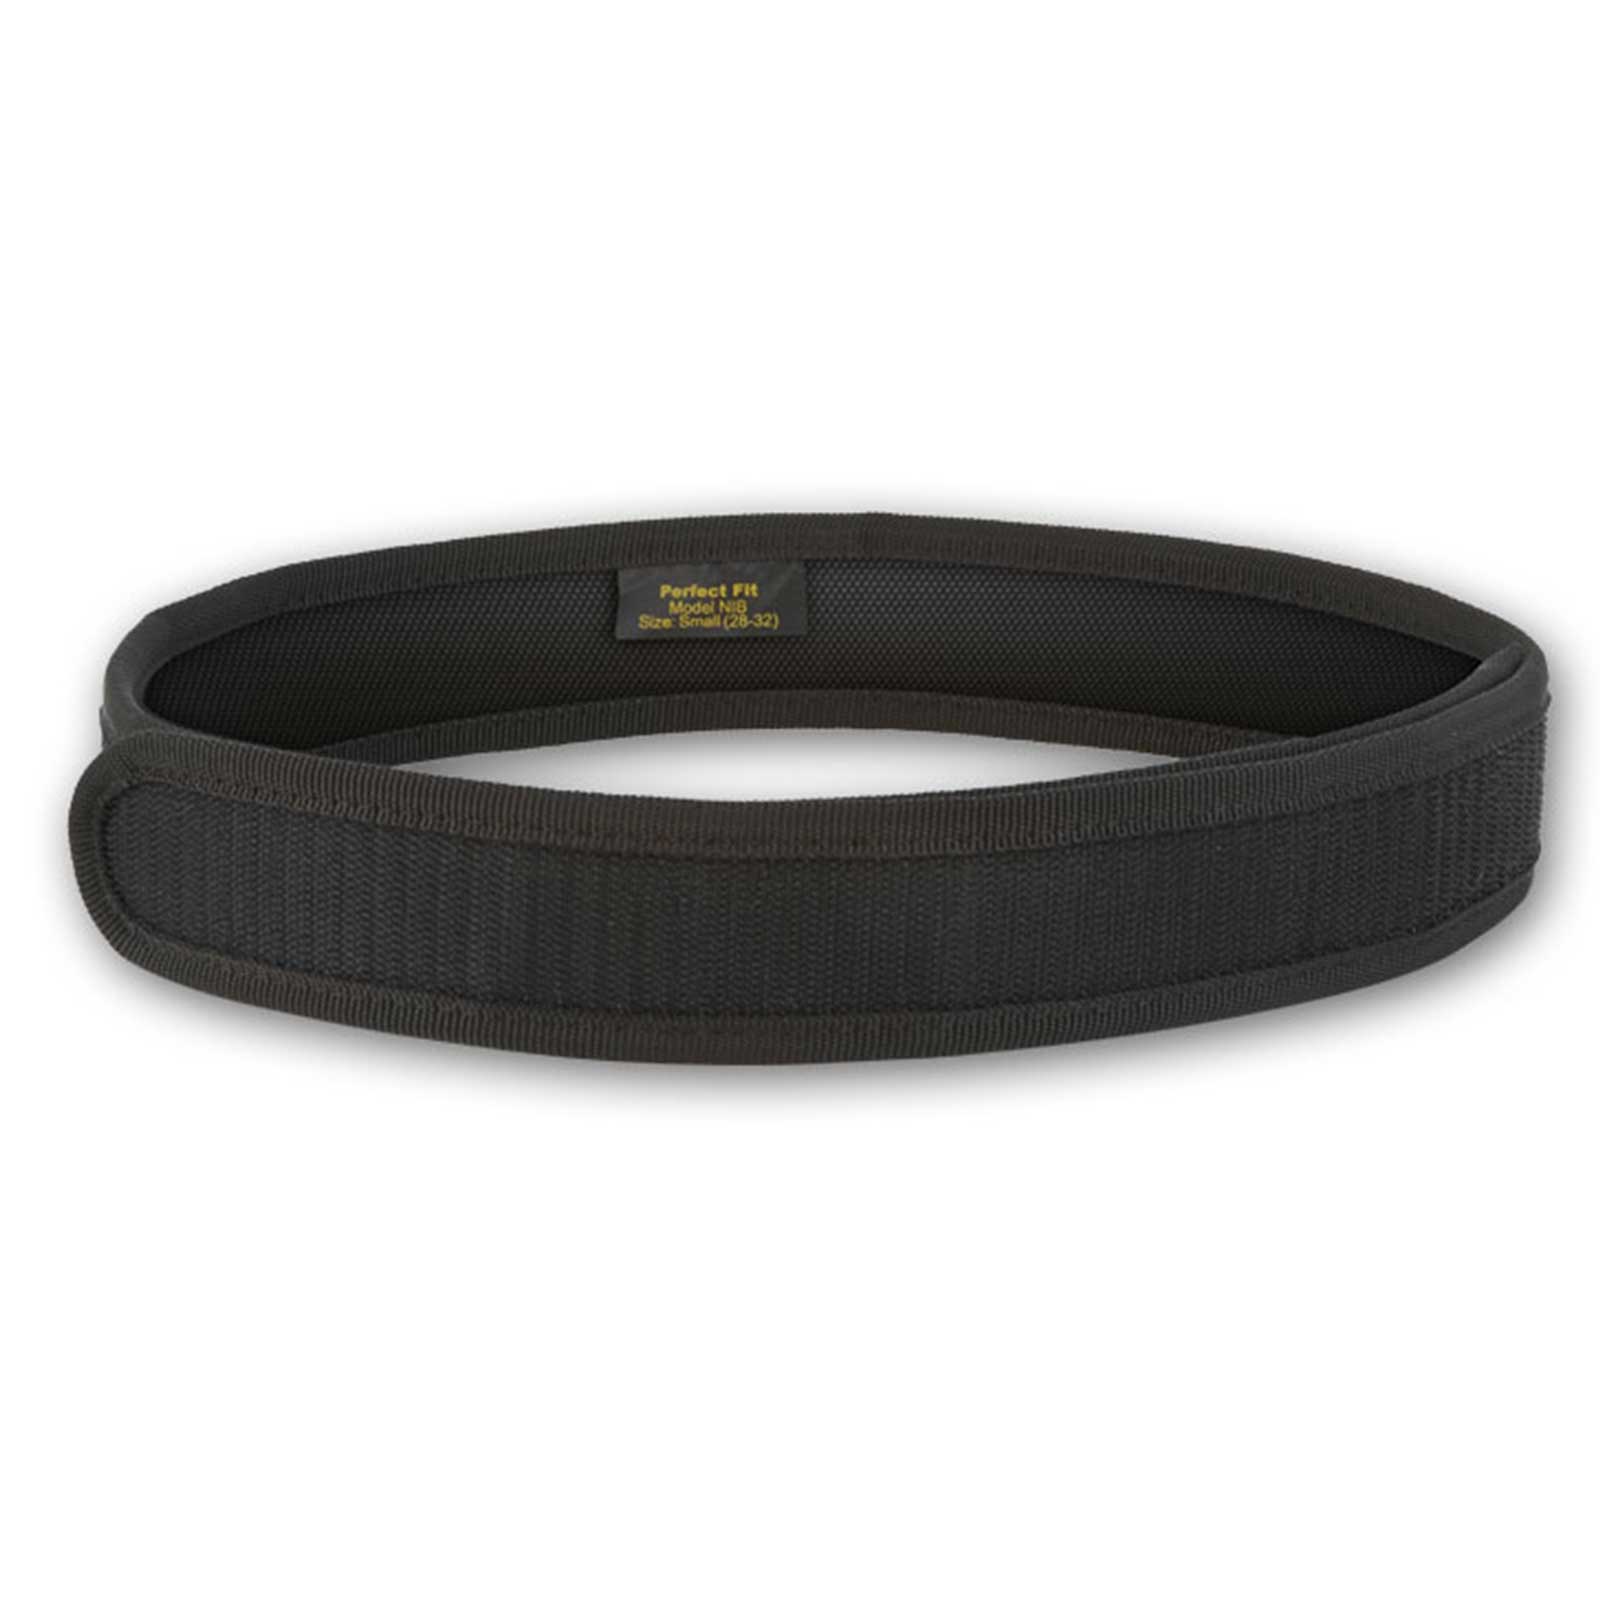 Perfect Fit Nylon Web Belt 1.5 - Velcro® Closure - Hook Lined